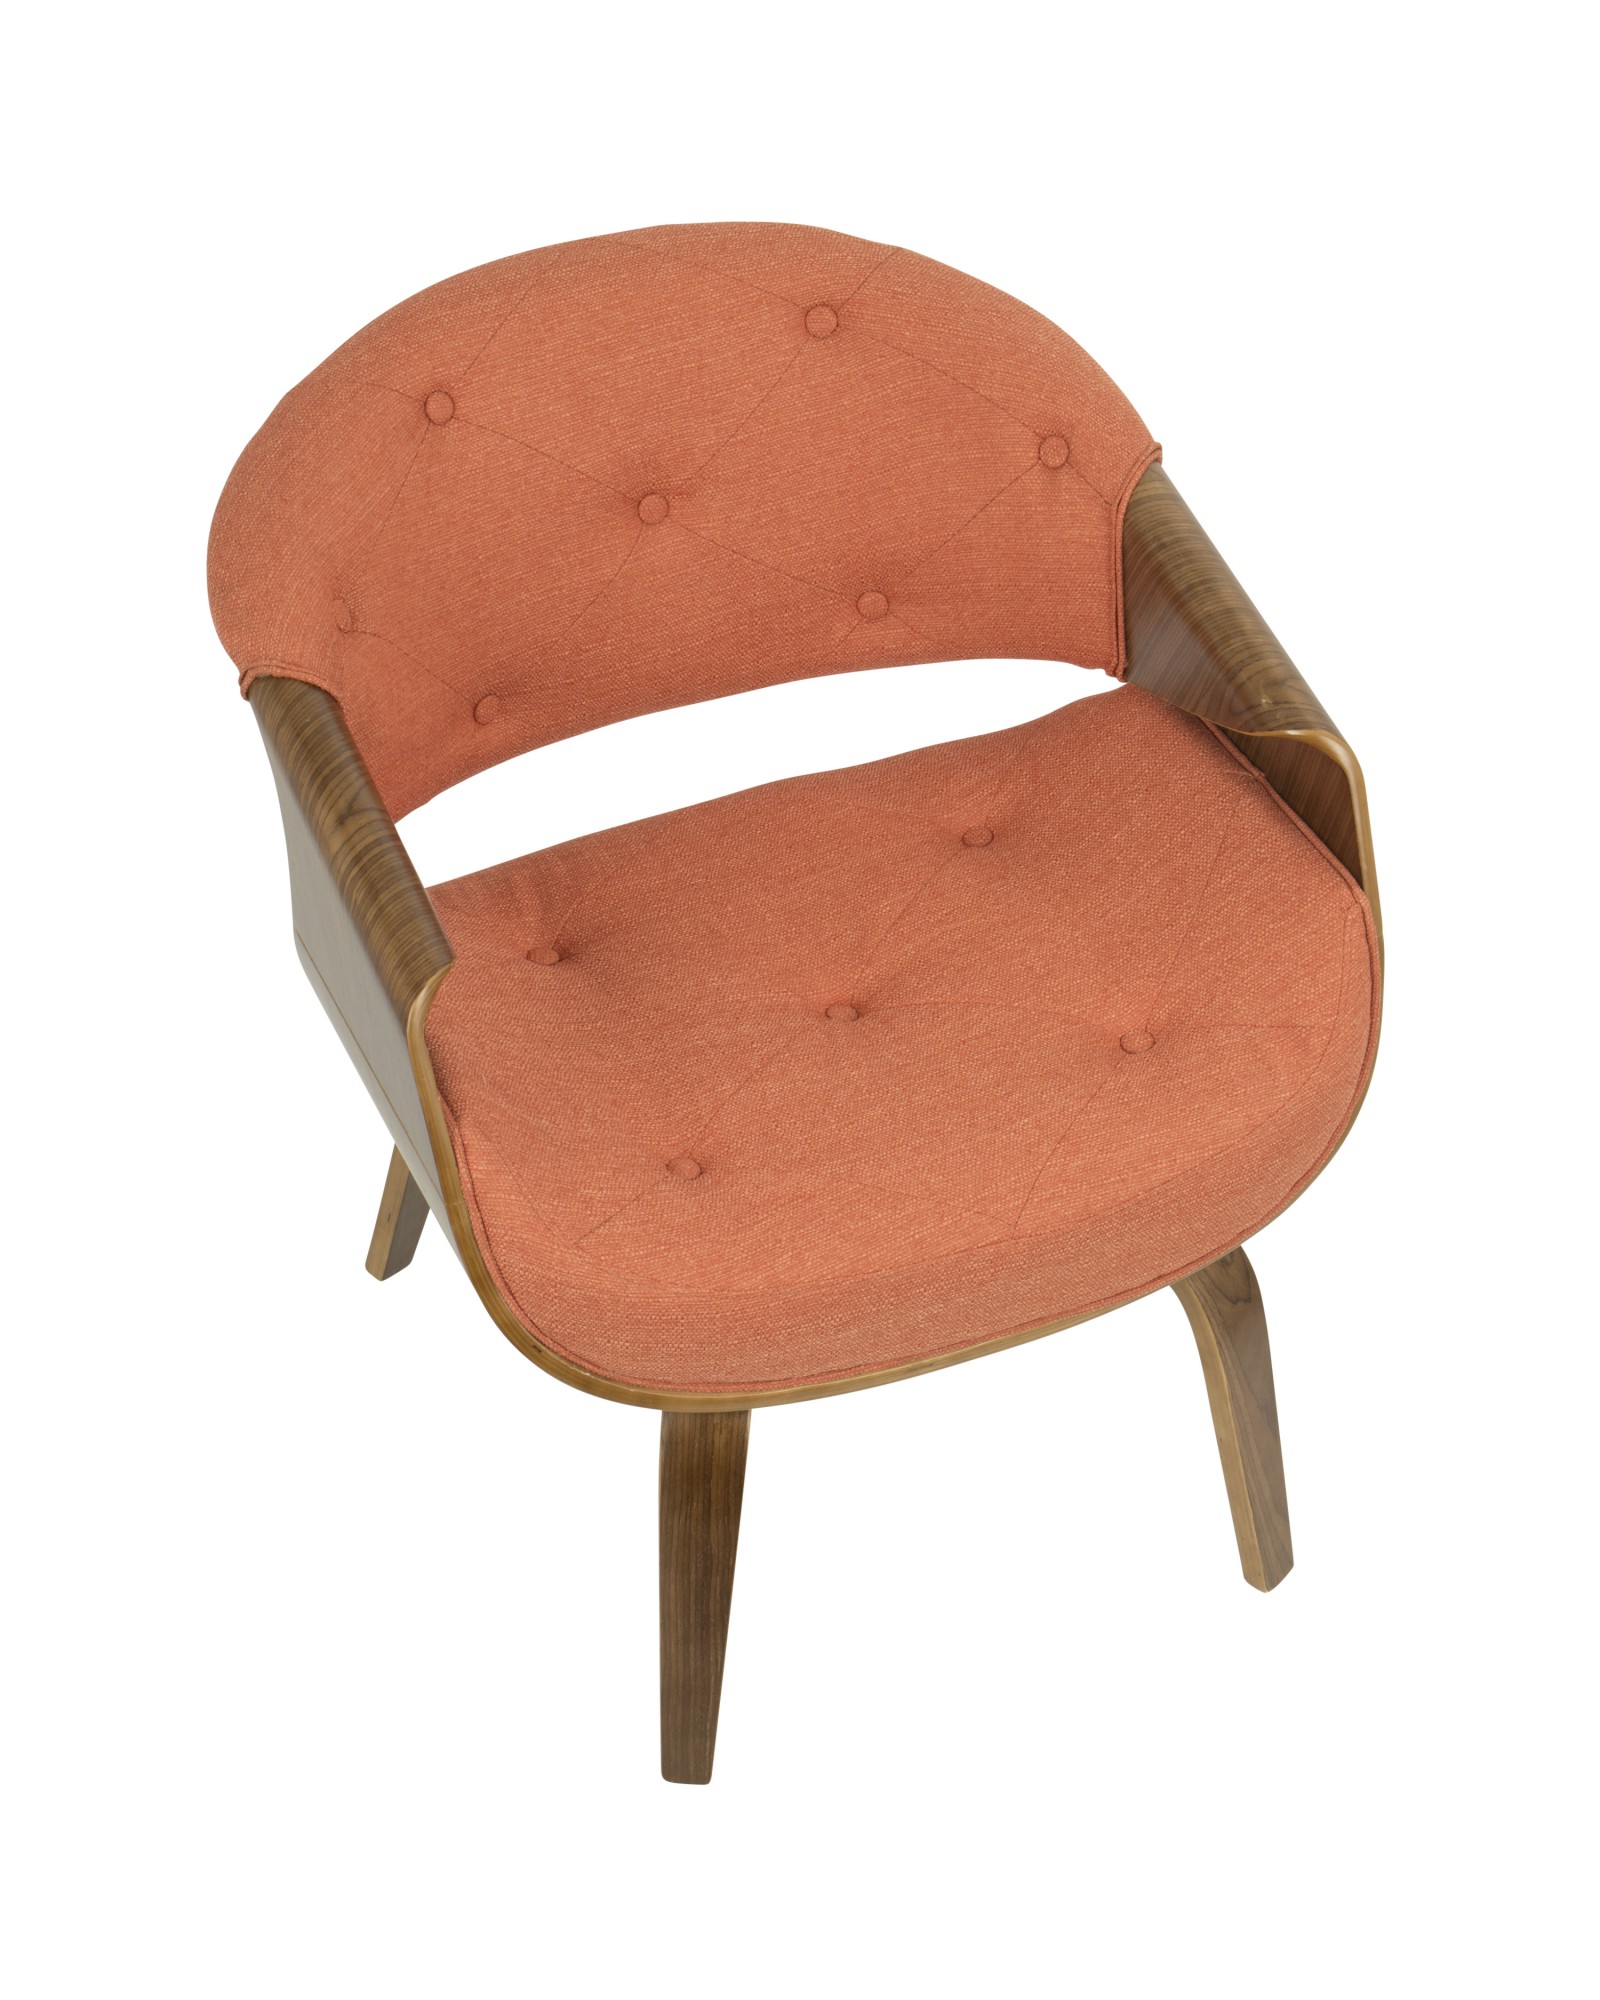 Curvo Mid-Century Modern Tufted Accent Chair in Walnut and Orange Fabric